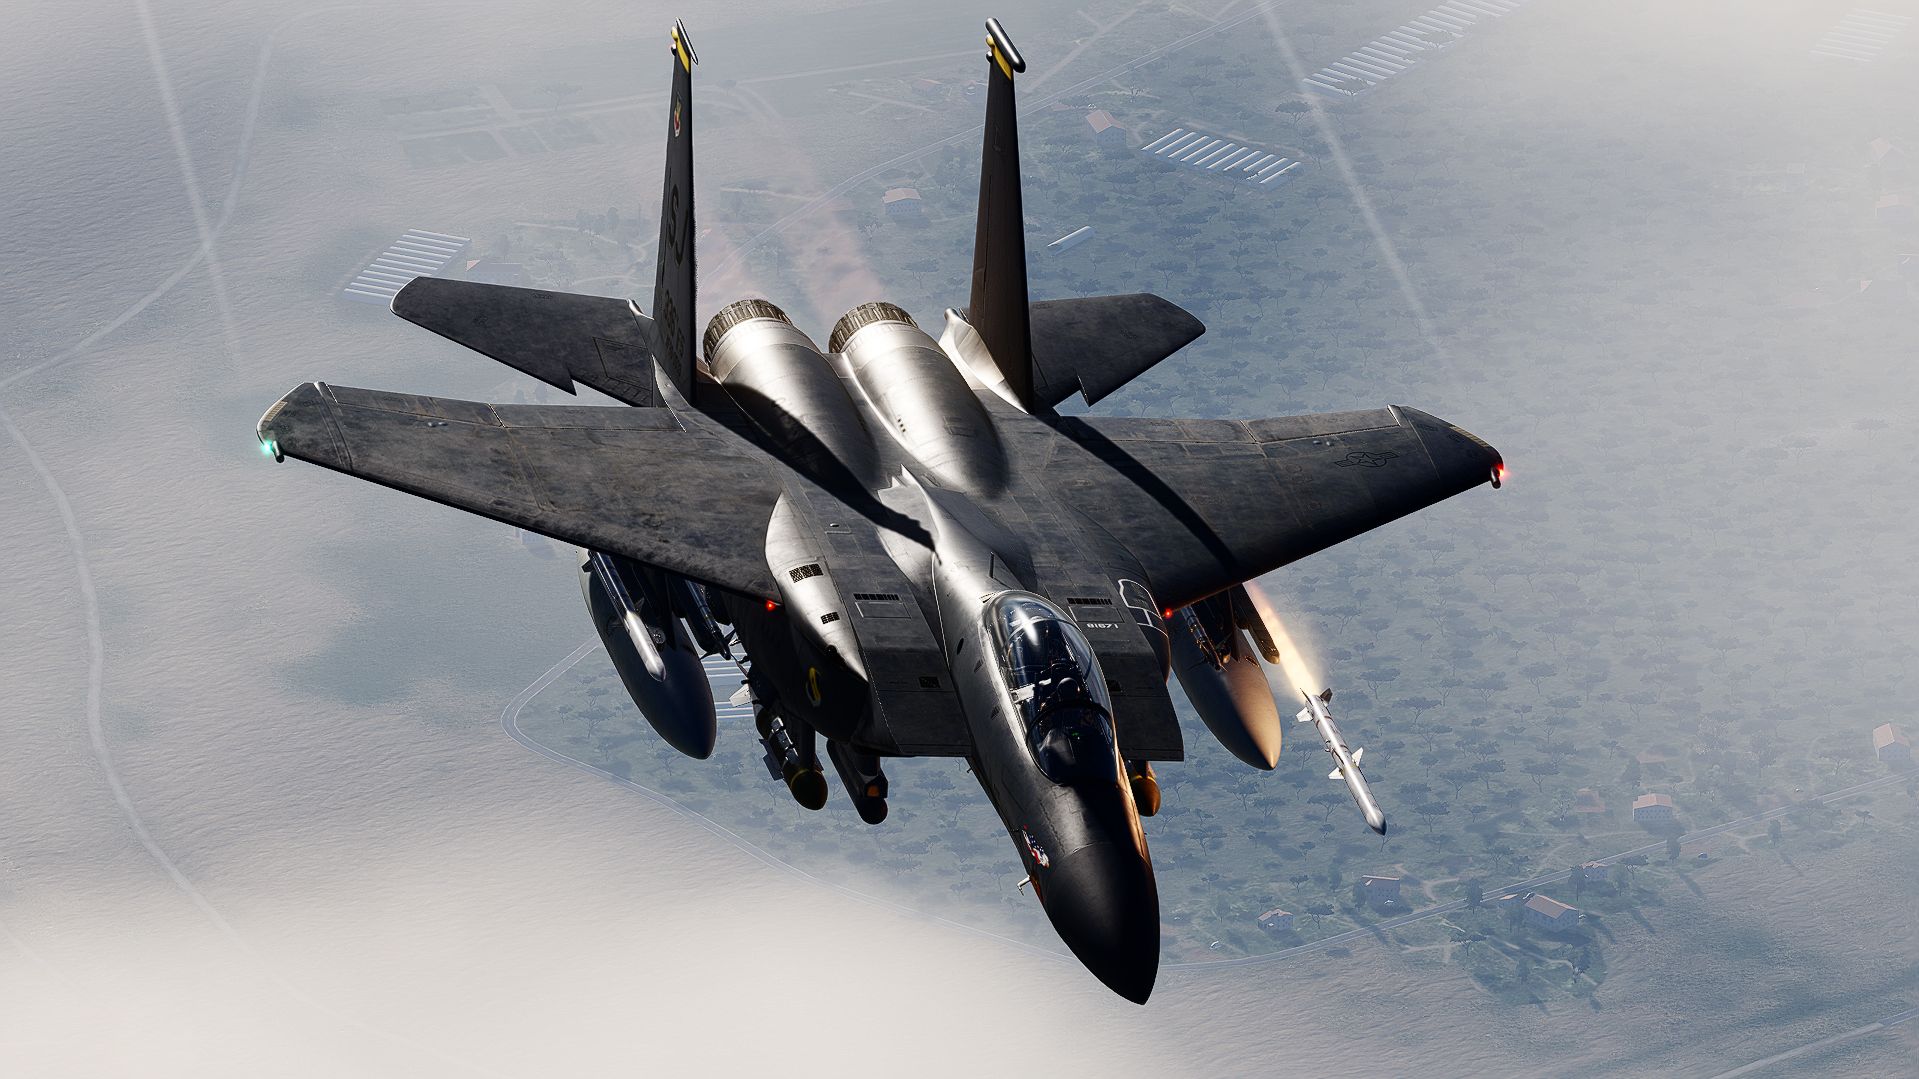 F-15E Strike eagle SJ 89-0503 "Taz"